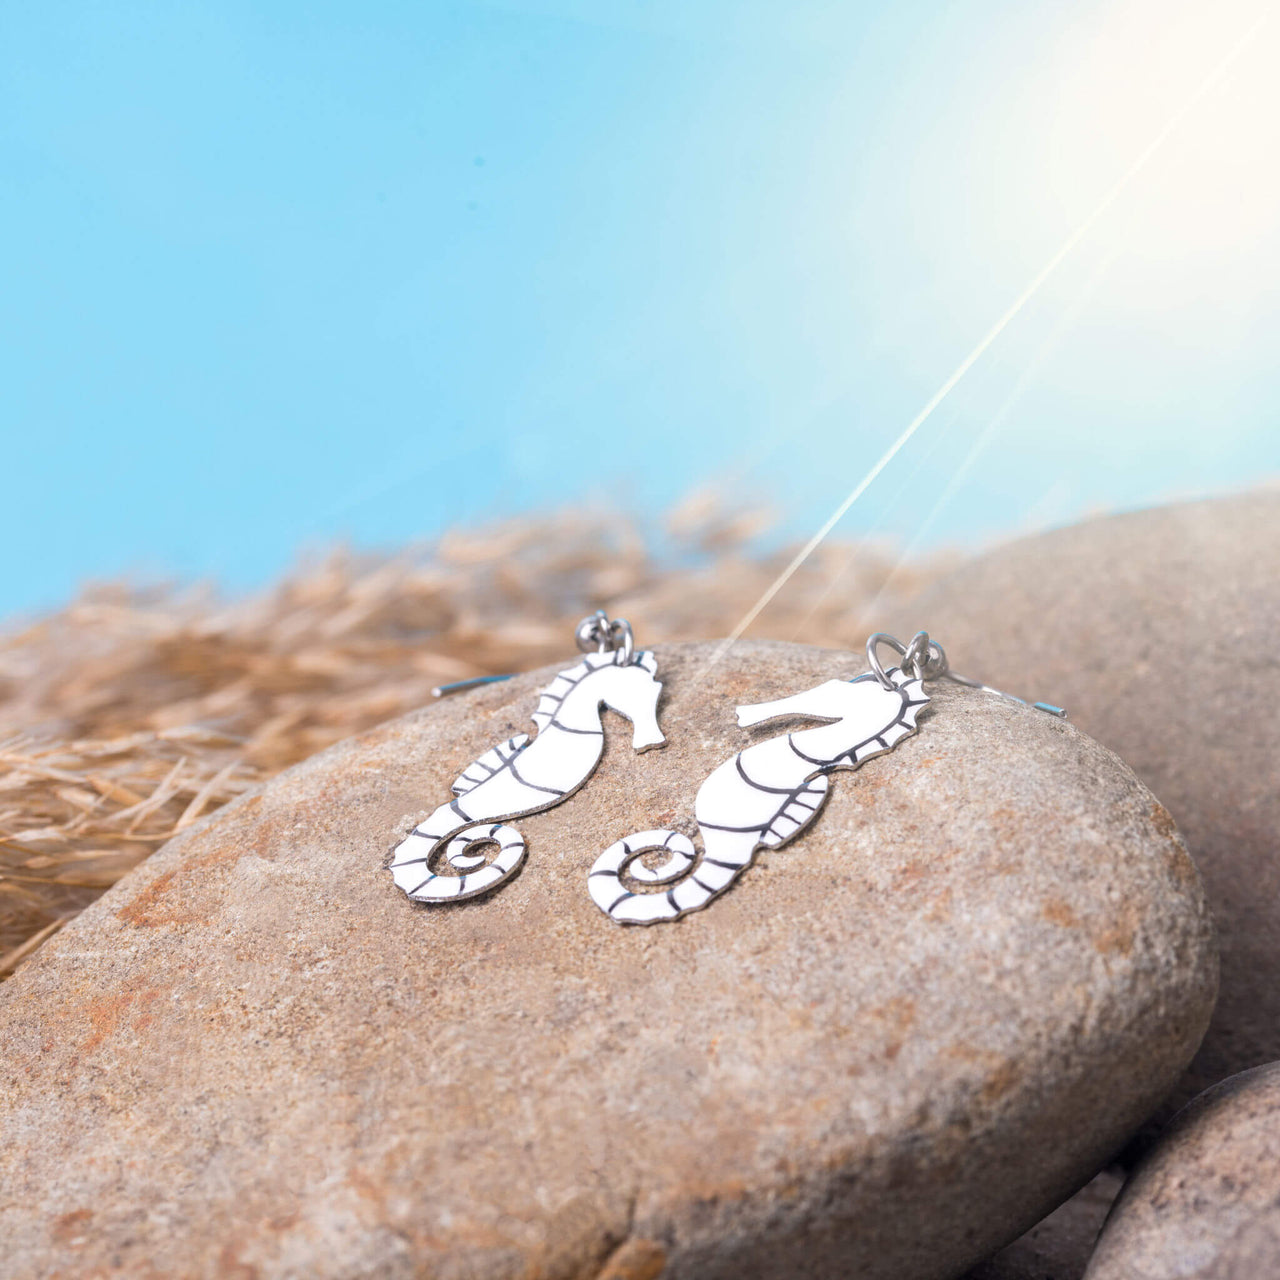 White seahorse earrings - enamel on stainless steel